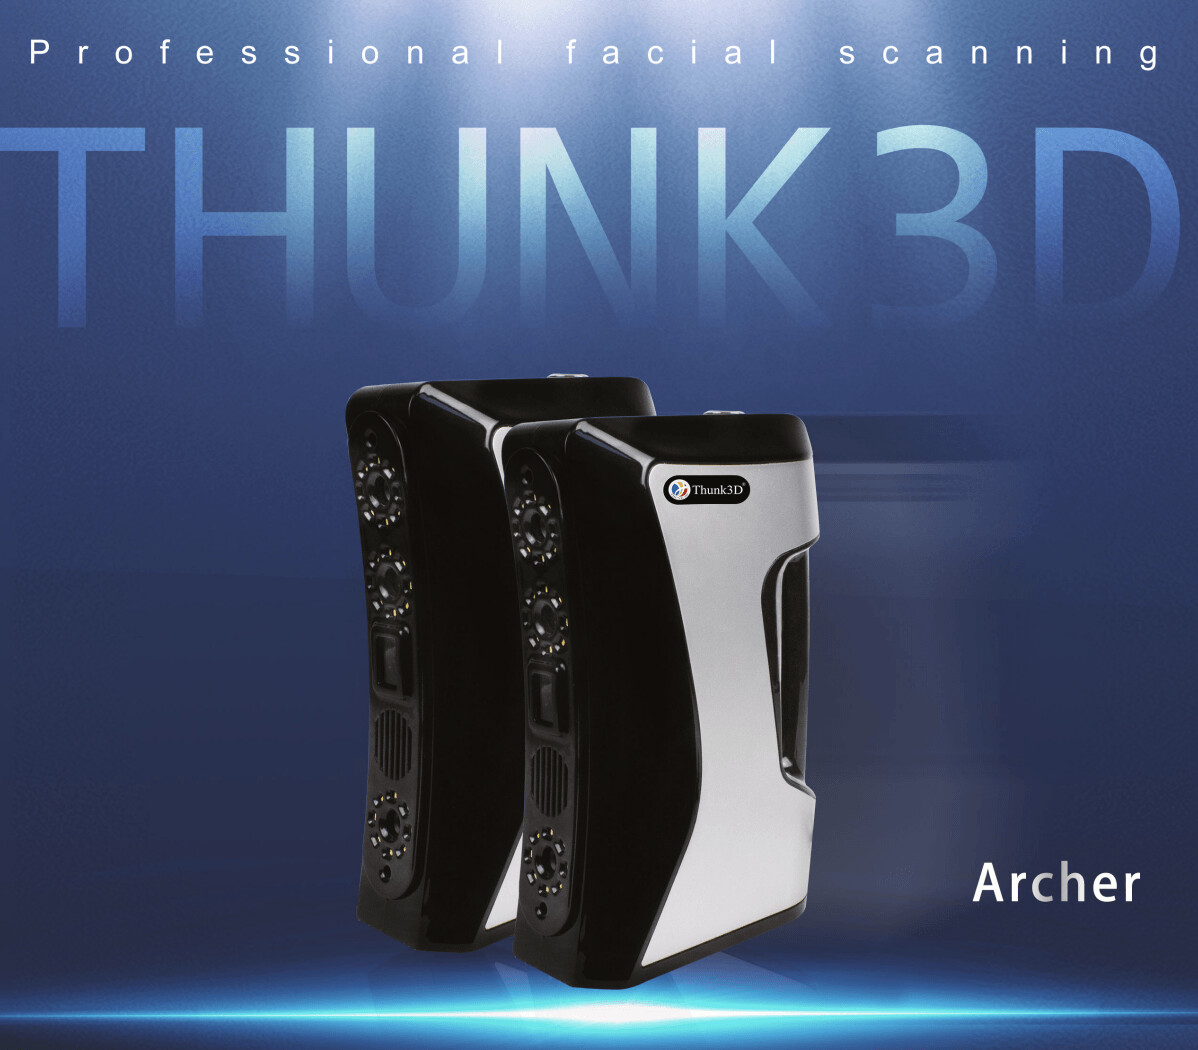 Thunk3D Facial Scanner